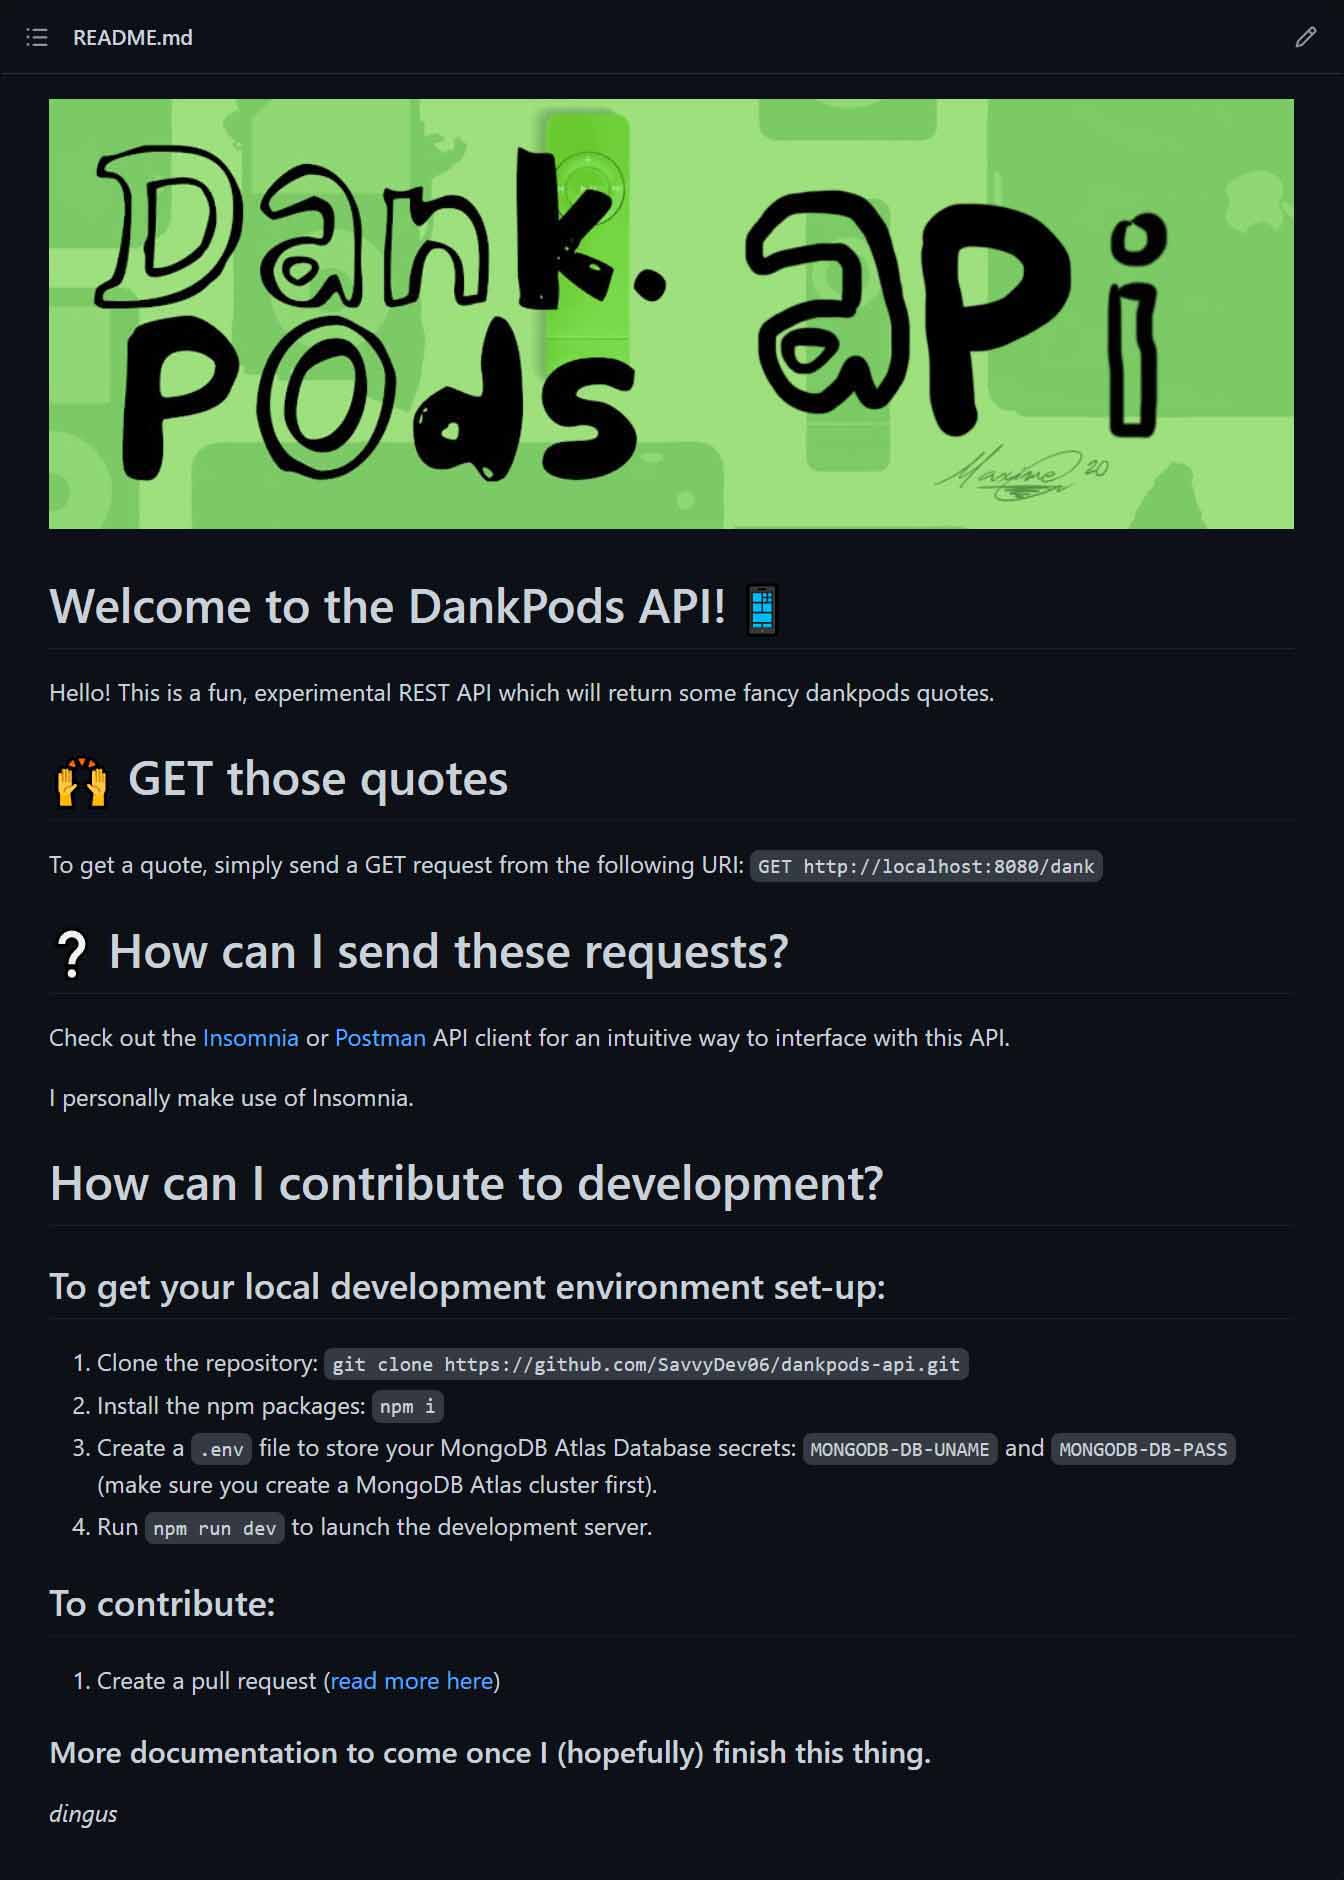 The DankPods API Logo